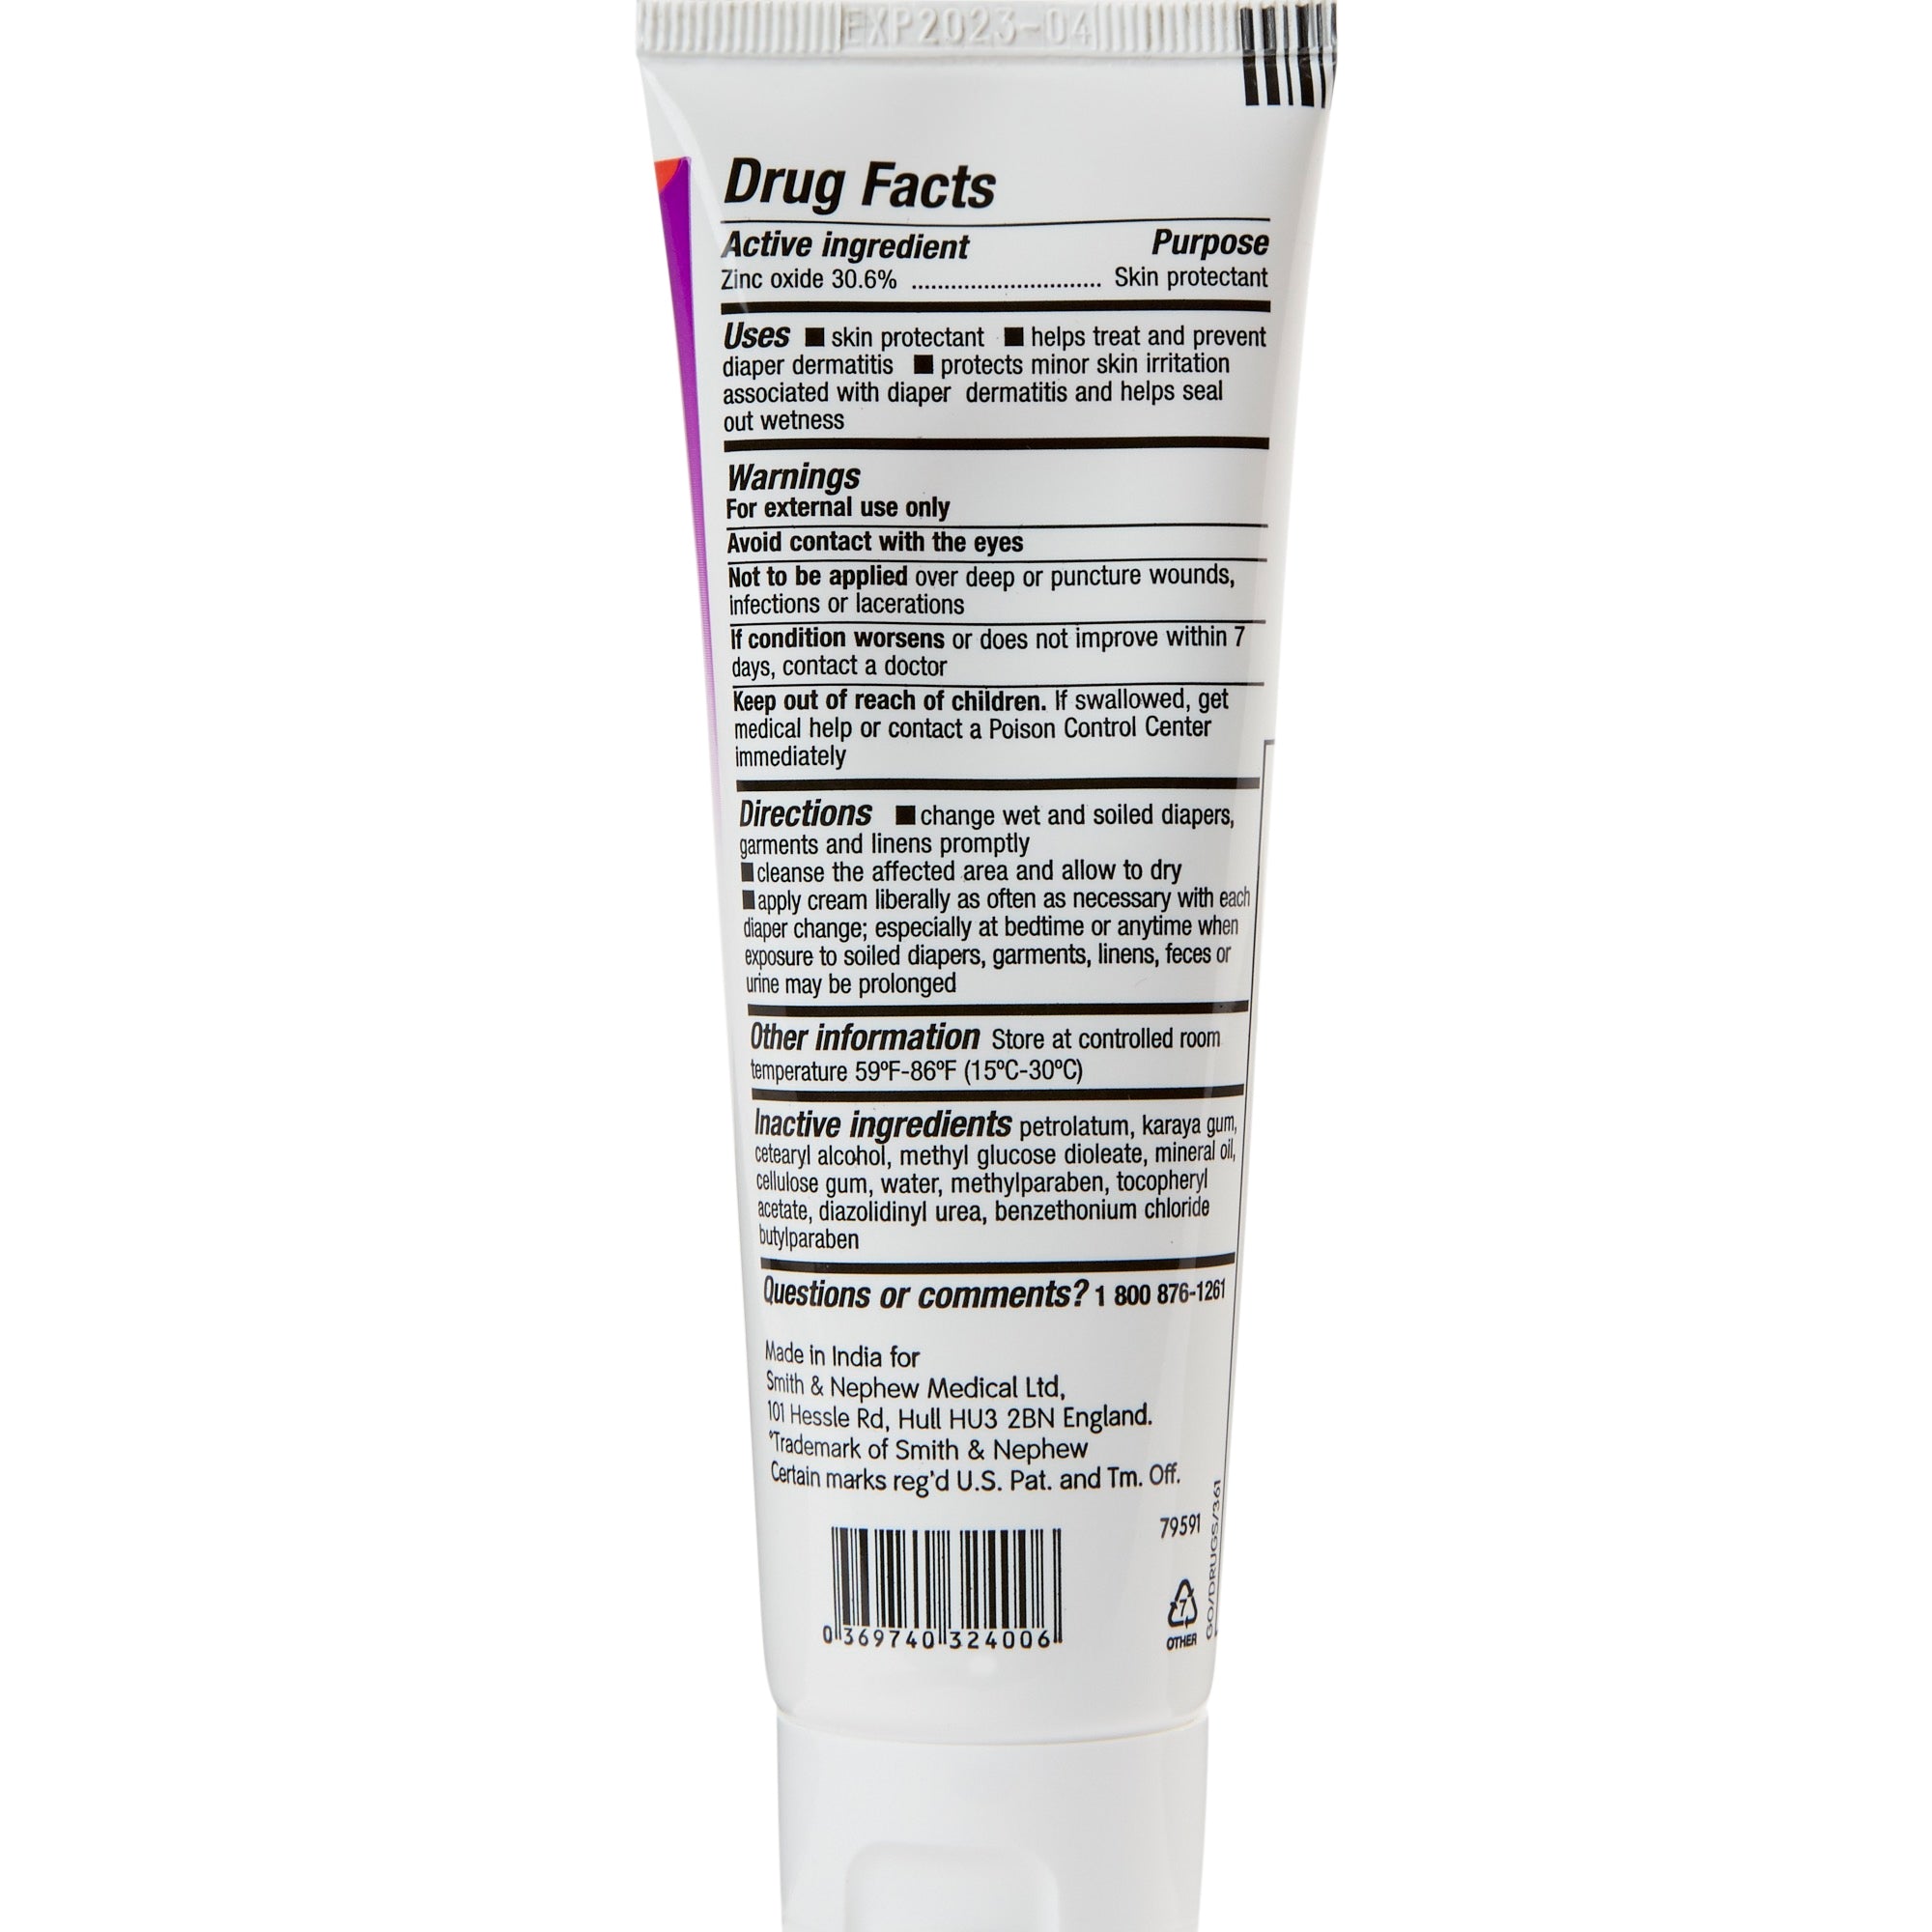 Secura® Extra Protective Cream 3.5oz